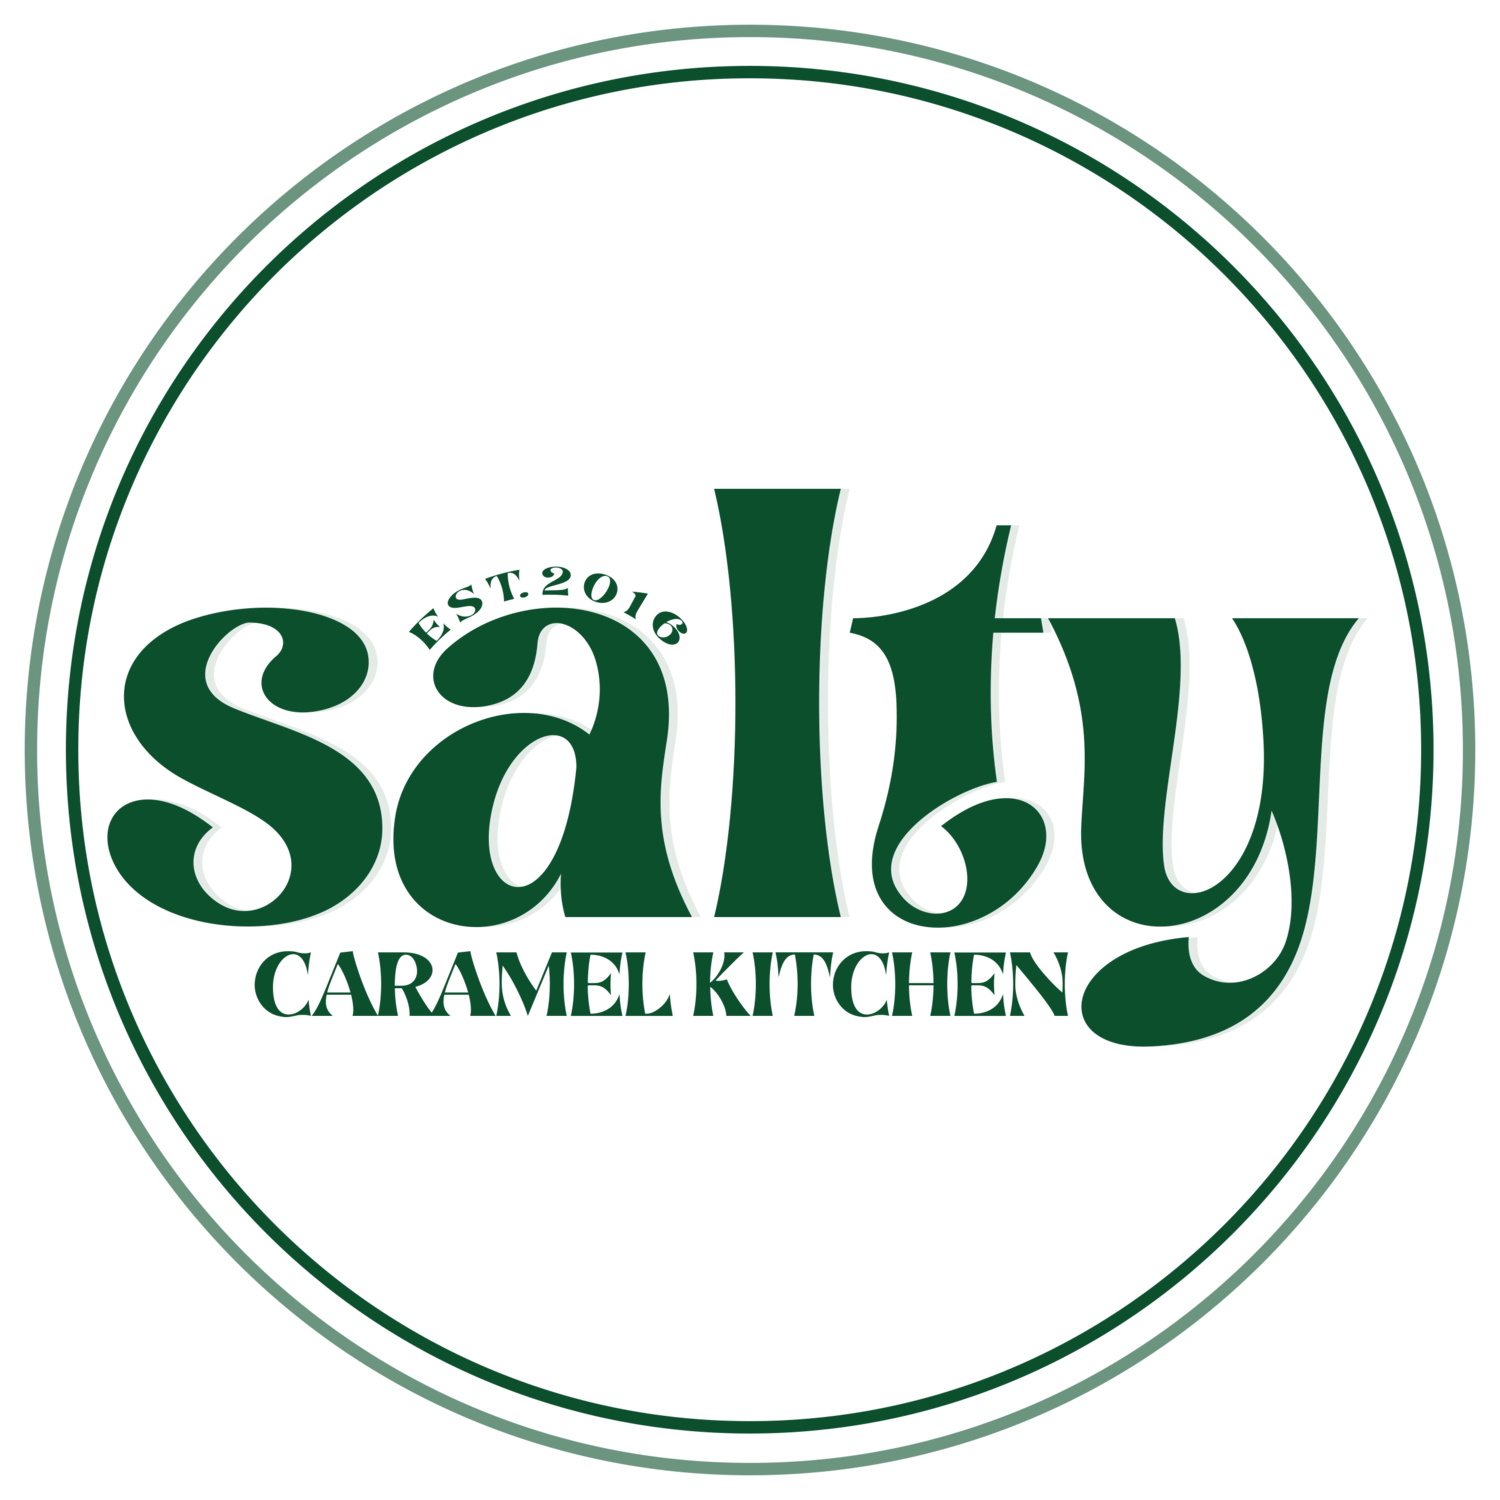 Salty Caramel Kitchen